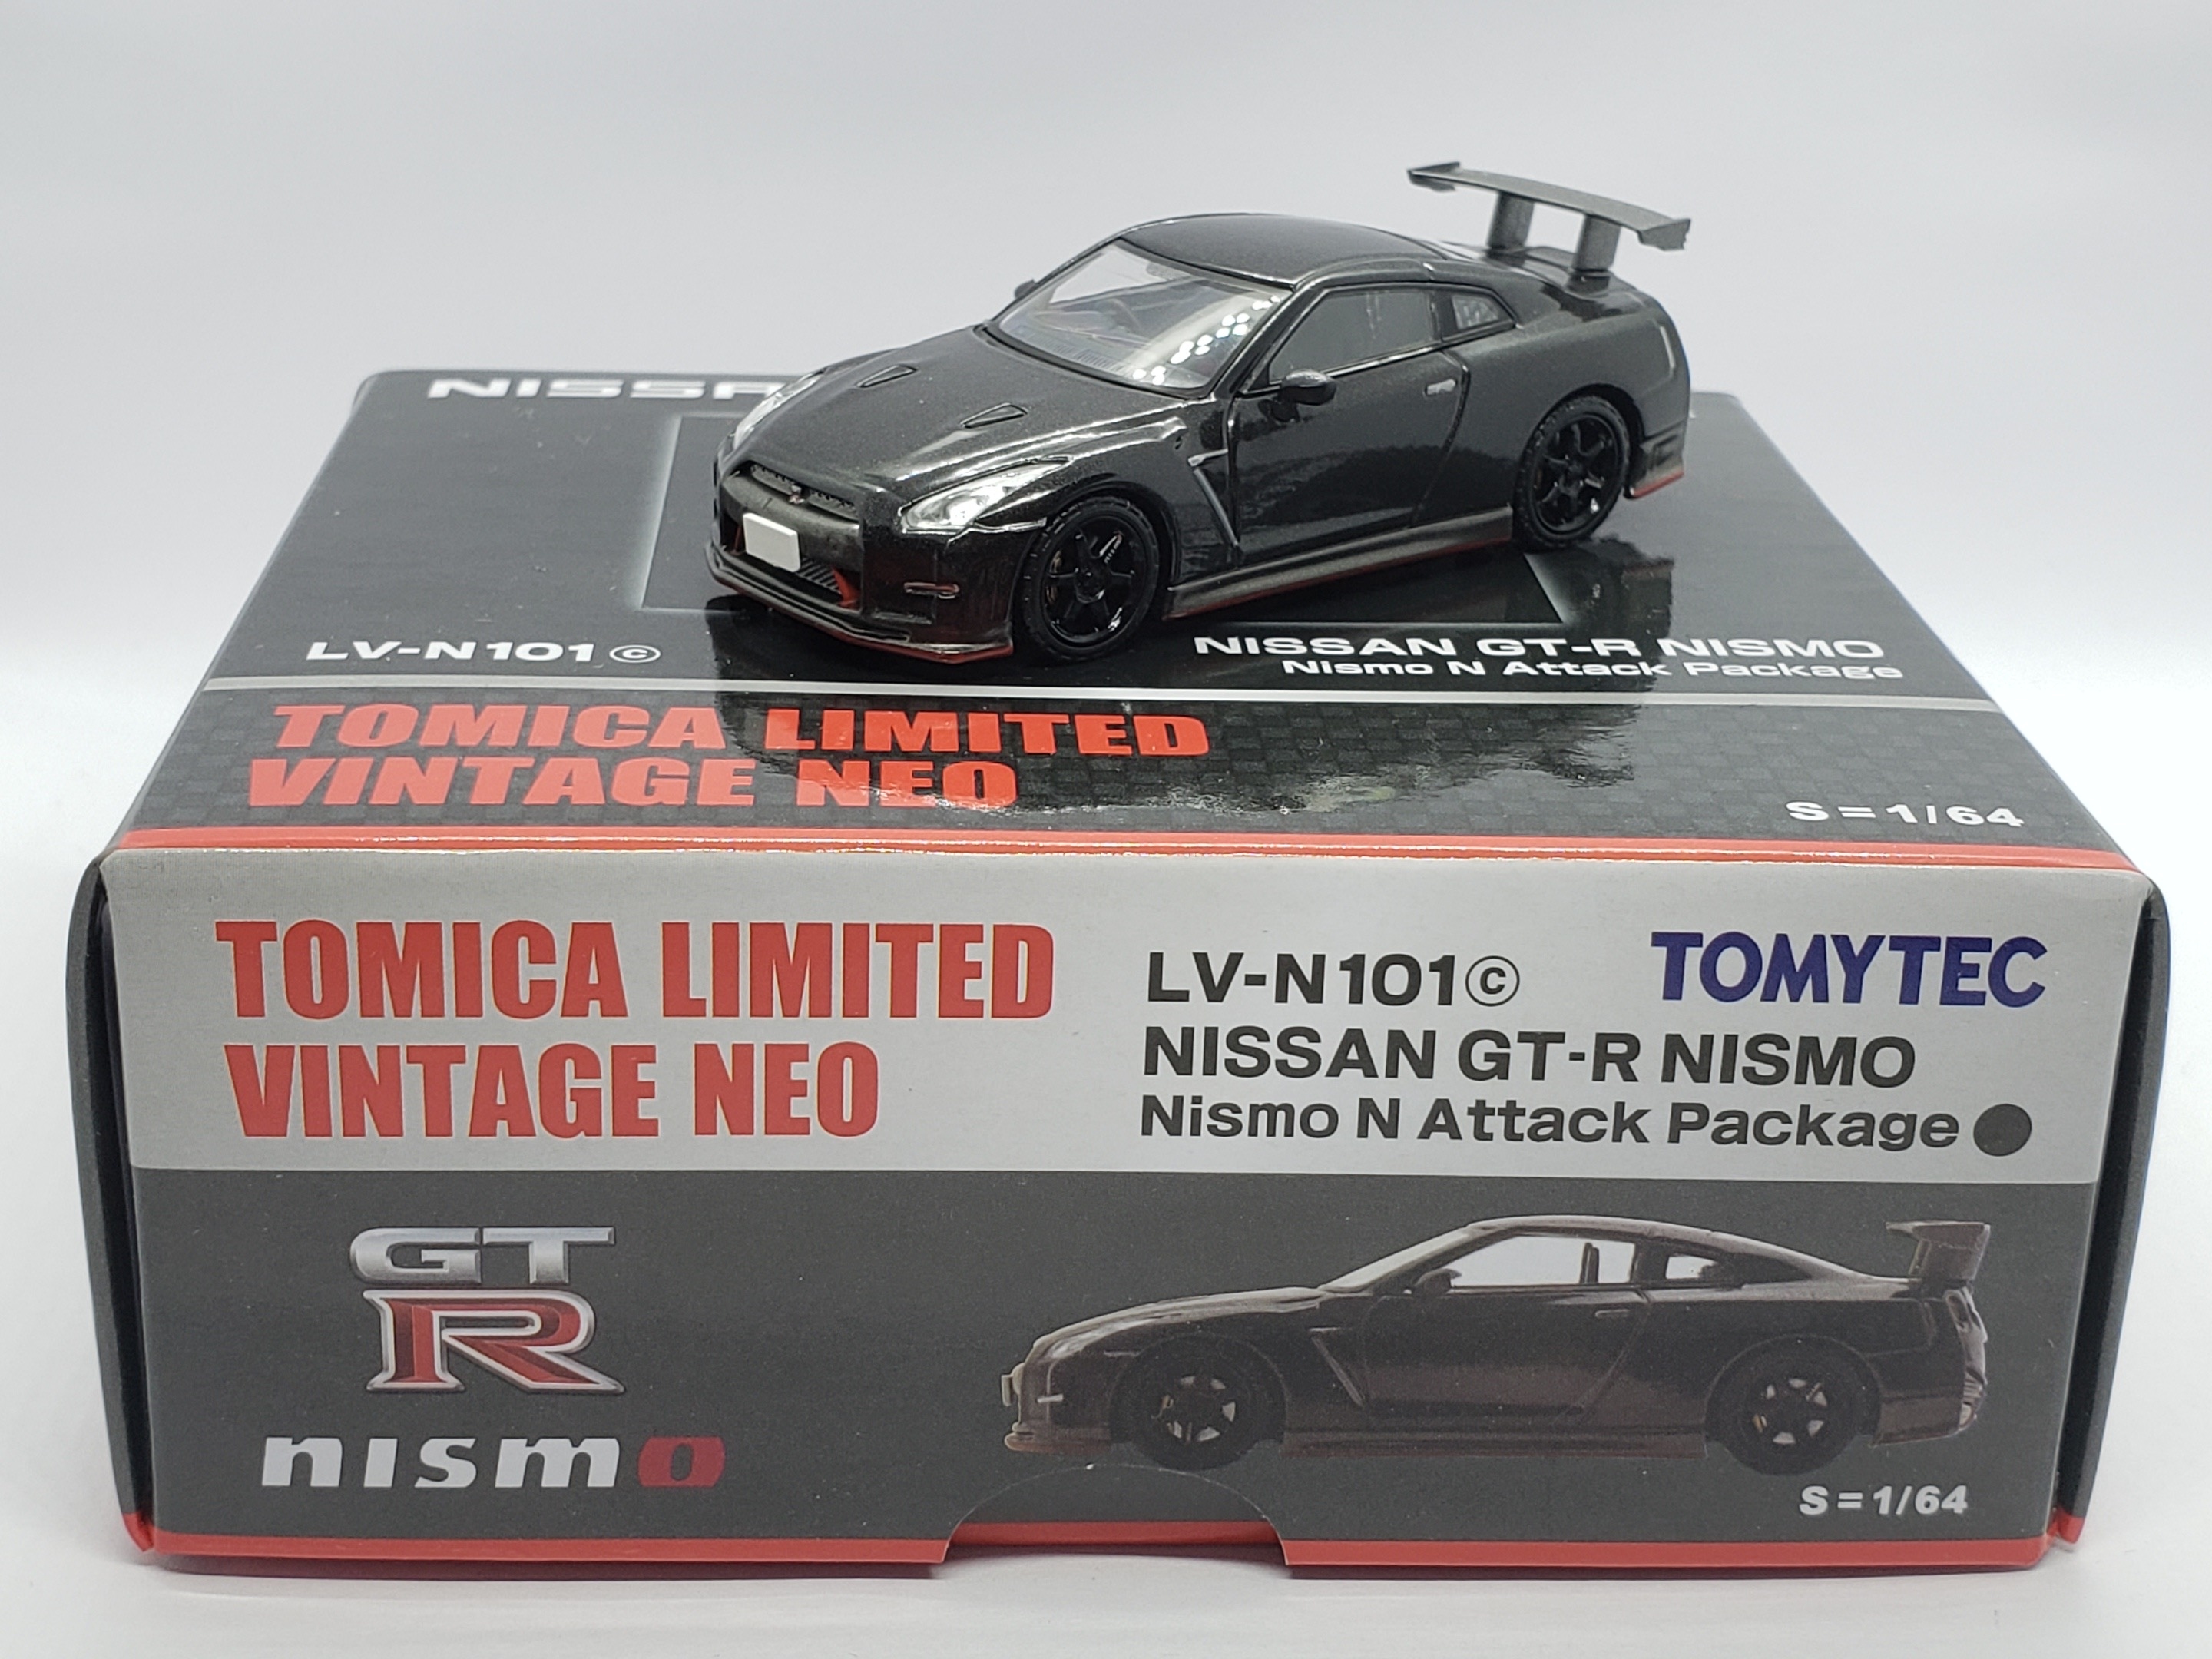 Tomica Limited Vintage NEO LV-N101c Nissan GT-R Nismo N